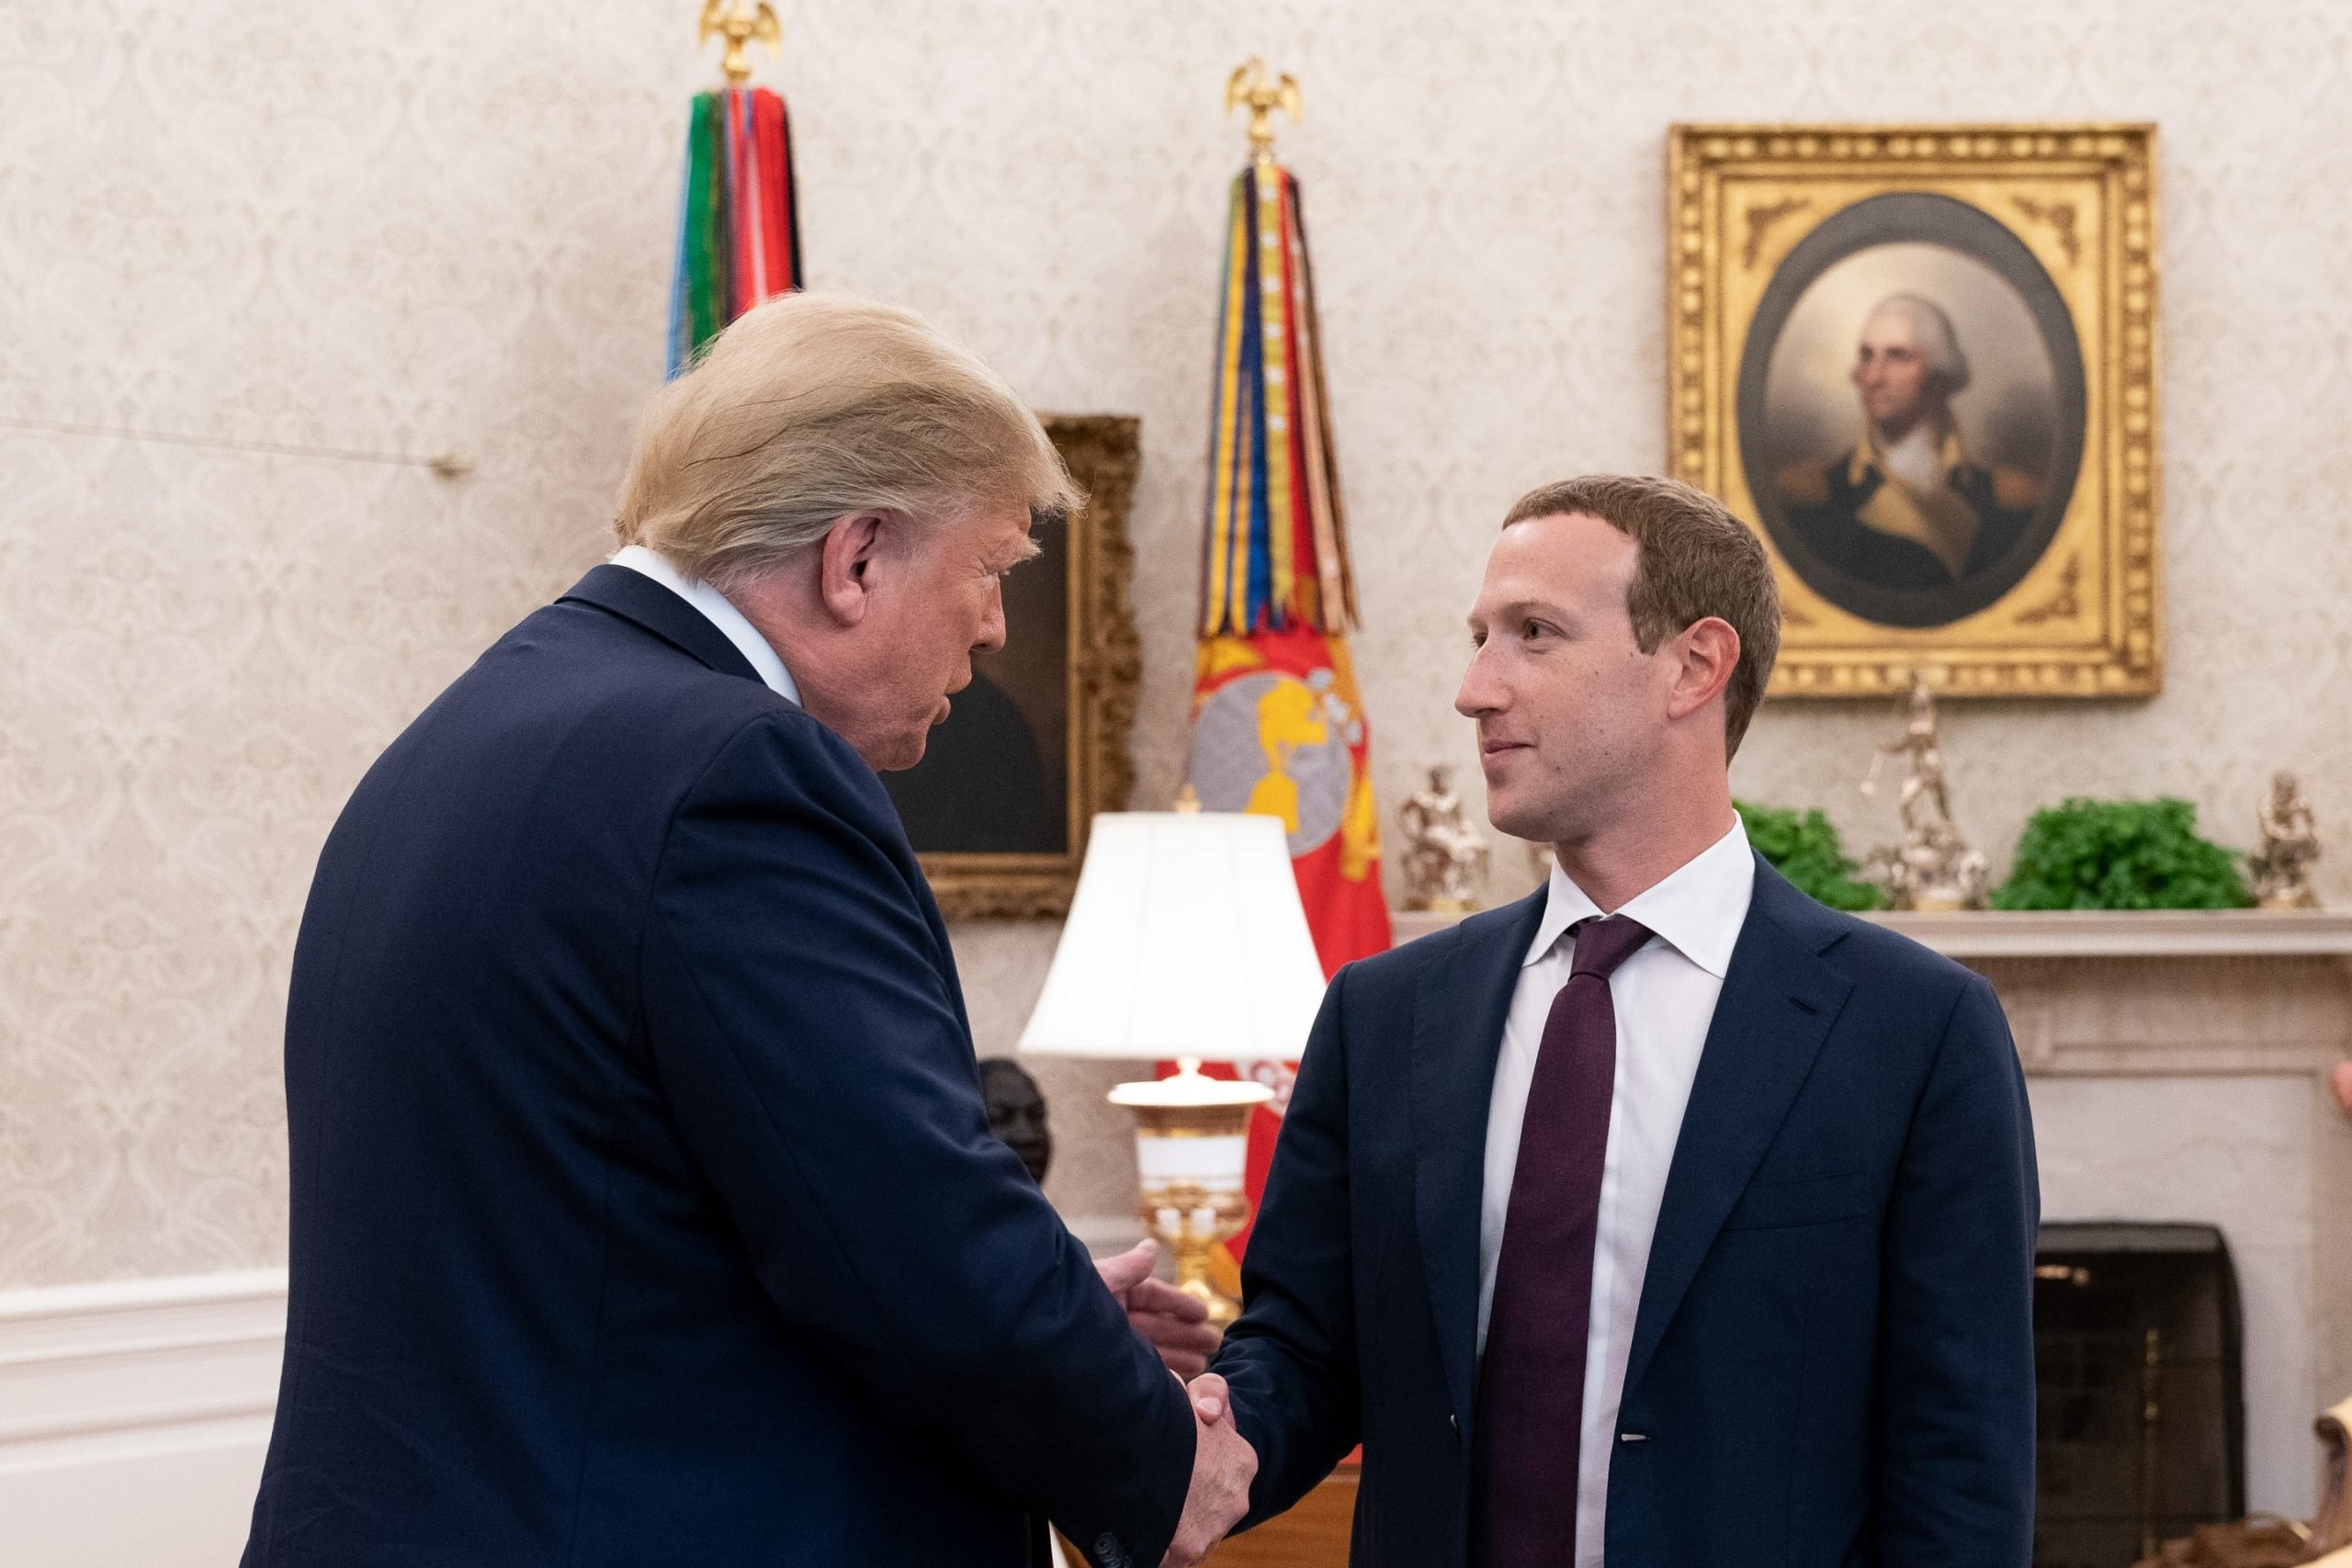 Mark Zuckerberg, CEO of Facebook, meeting former US President Donald Trump